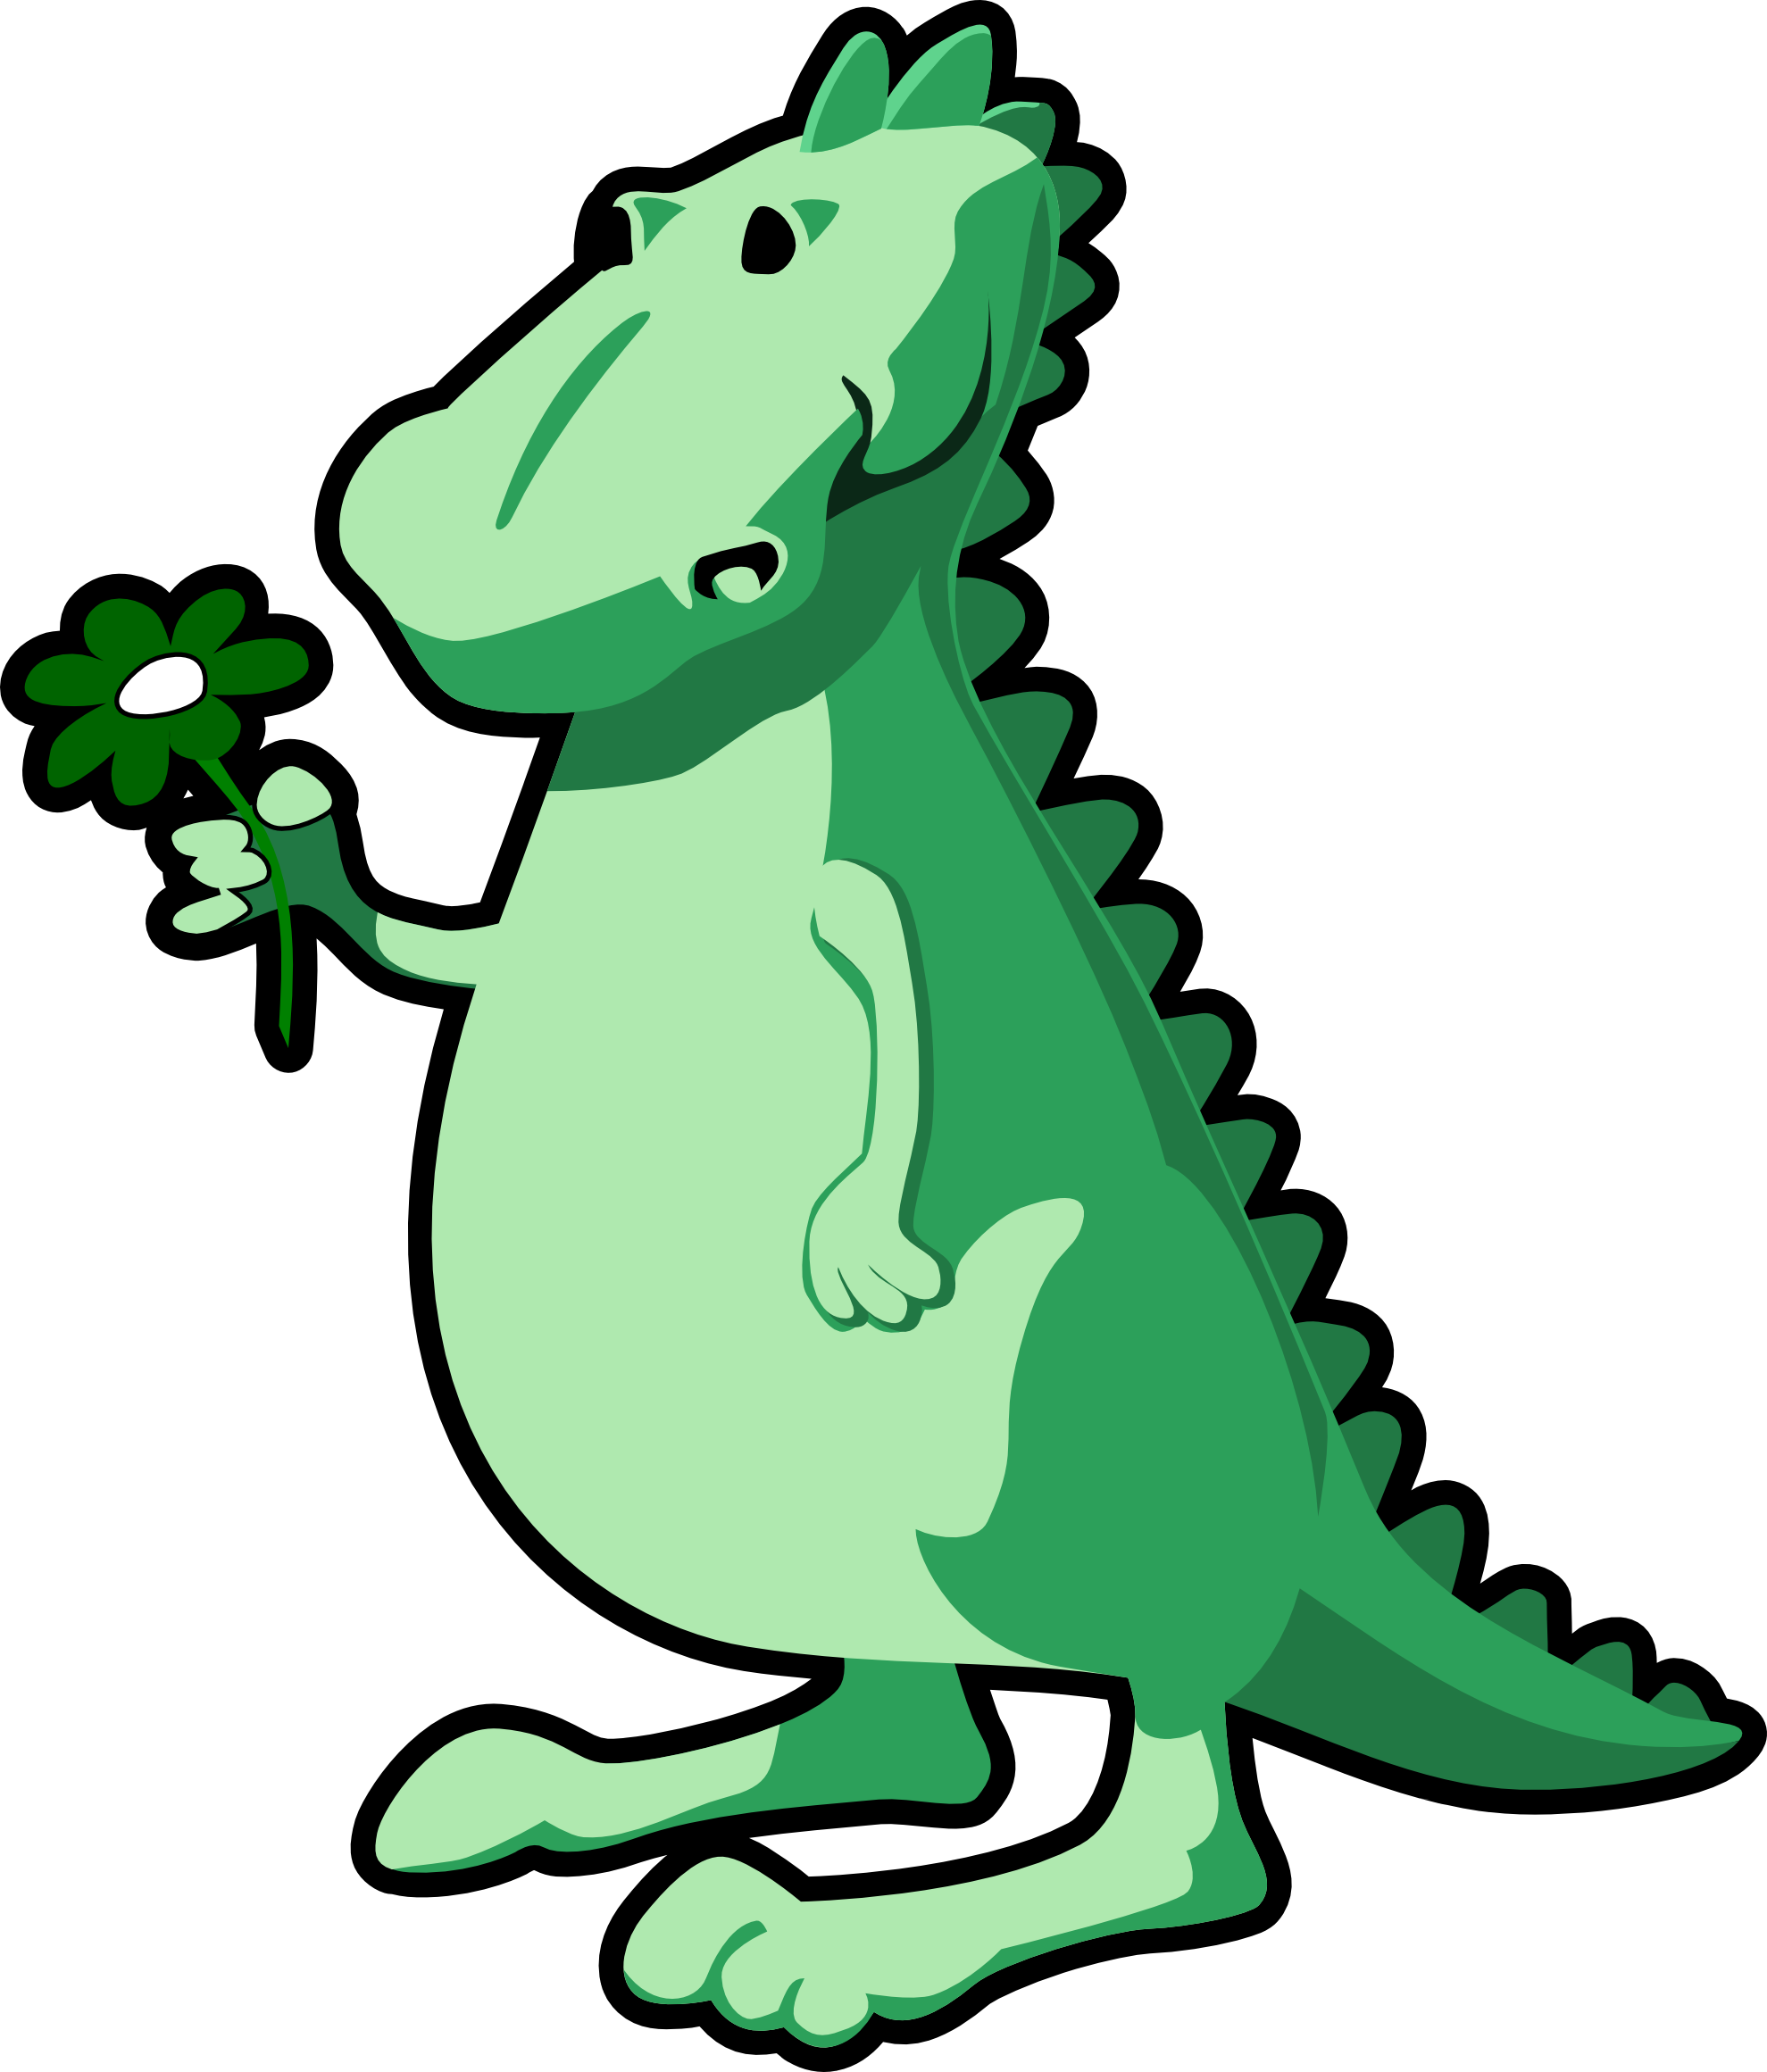 Dragon Lizard Dinosaur with Flower Dark Green xochi.info dingle ...